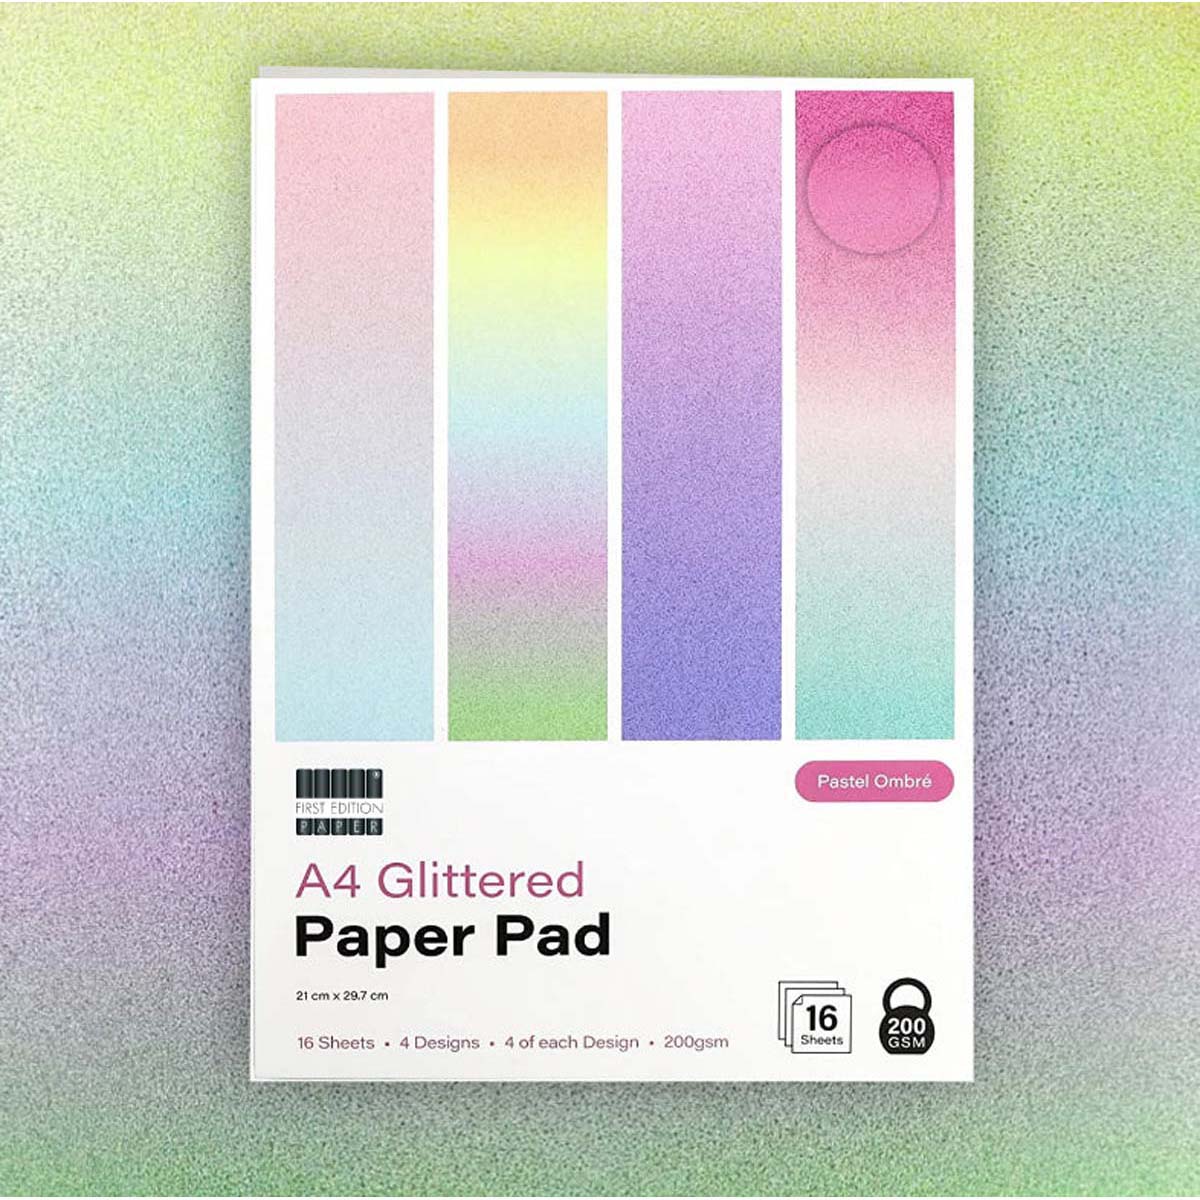 Eerste editie - A4 Glittered Paper Pad Pastel Ombre